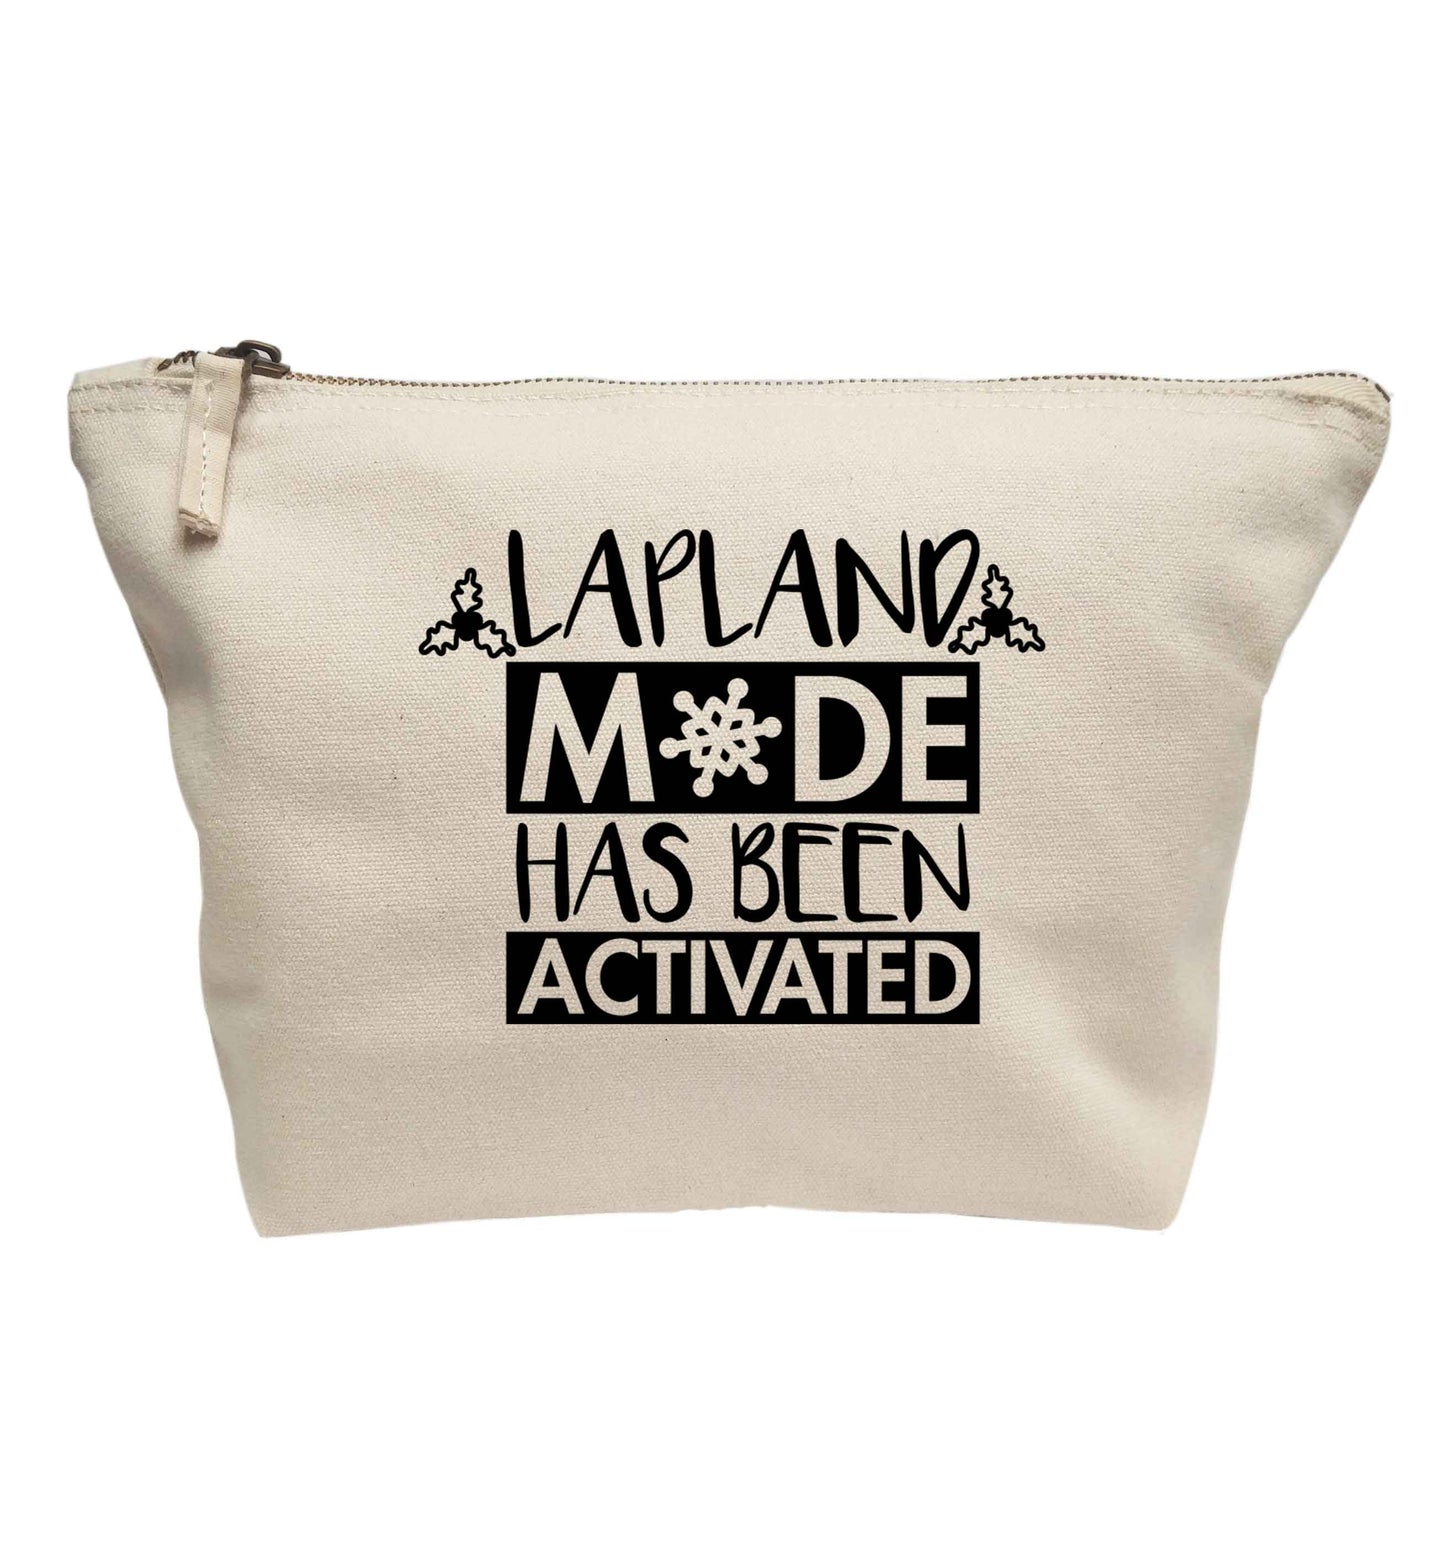 Lapland mode has been activated | Makeup / wash bag